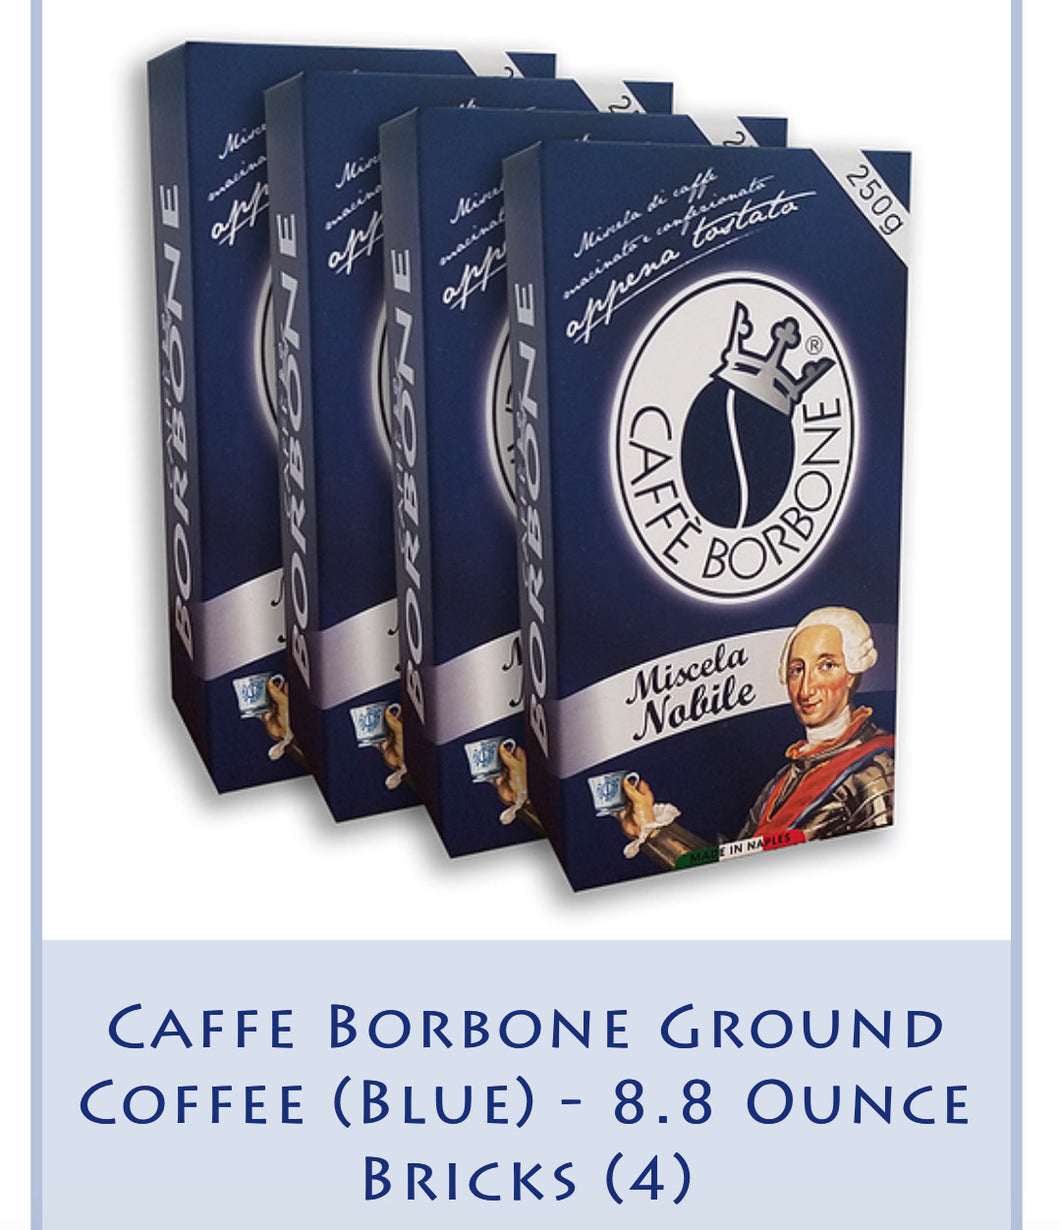 Caffe Borbone Ground Coffee (Blue) - 8.8 Ounce Bricks (4) – Delizioso  Gourmet